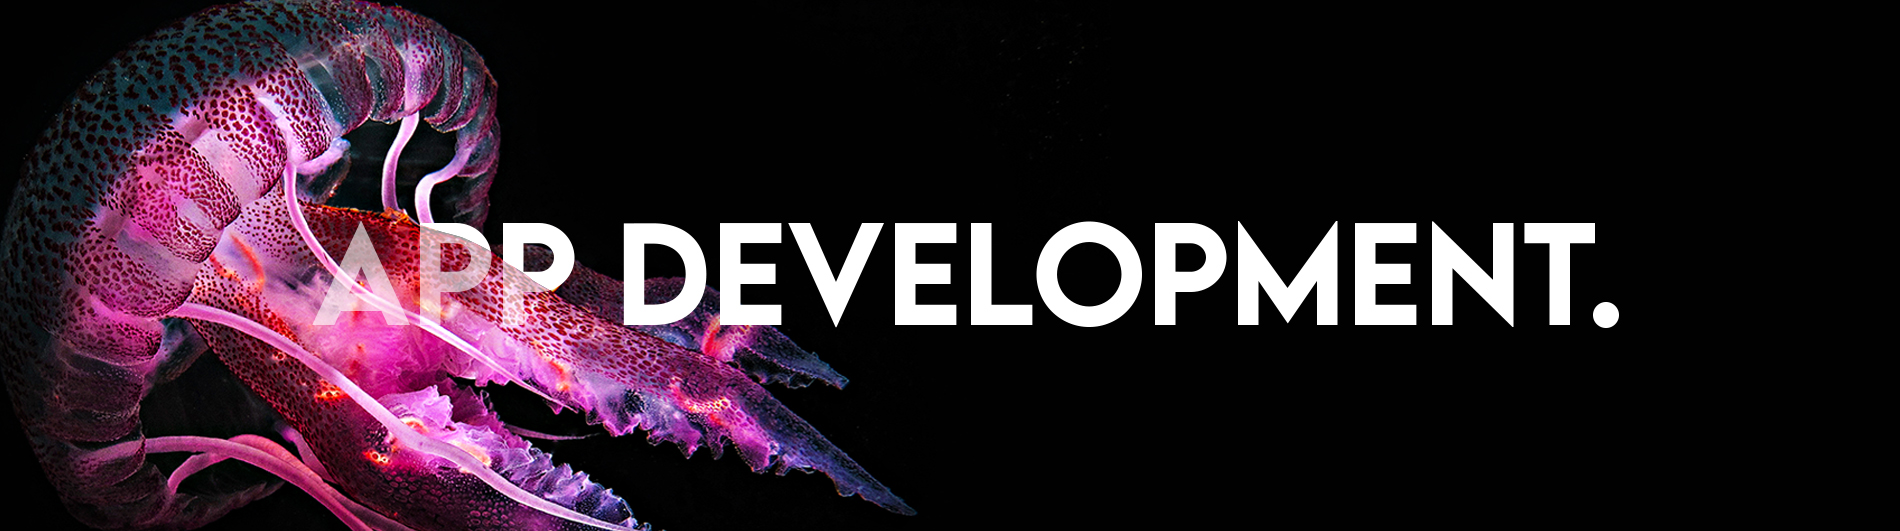 App Development jellyfish title image